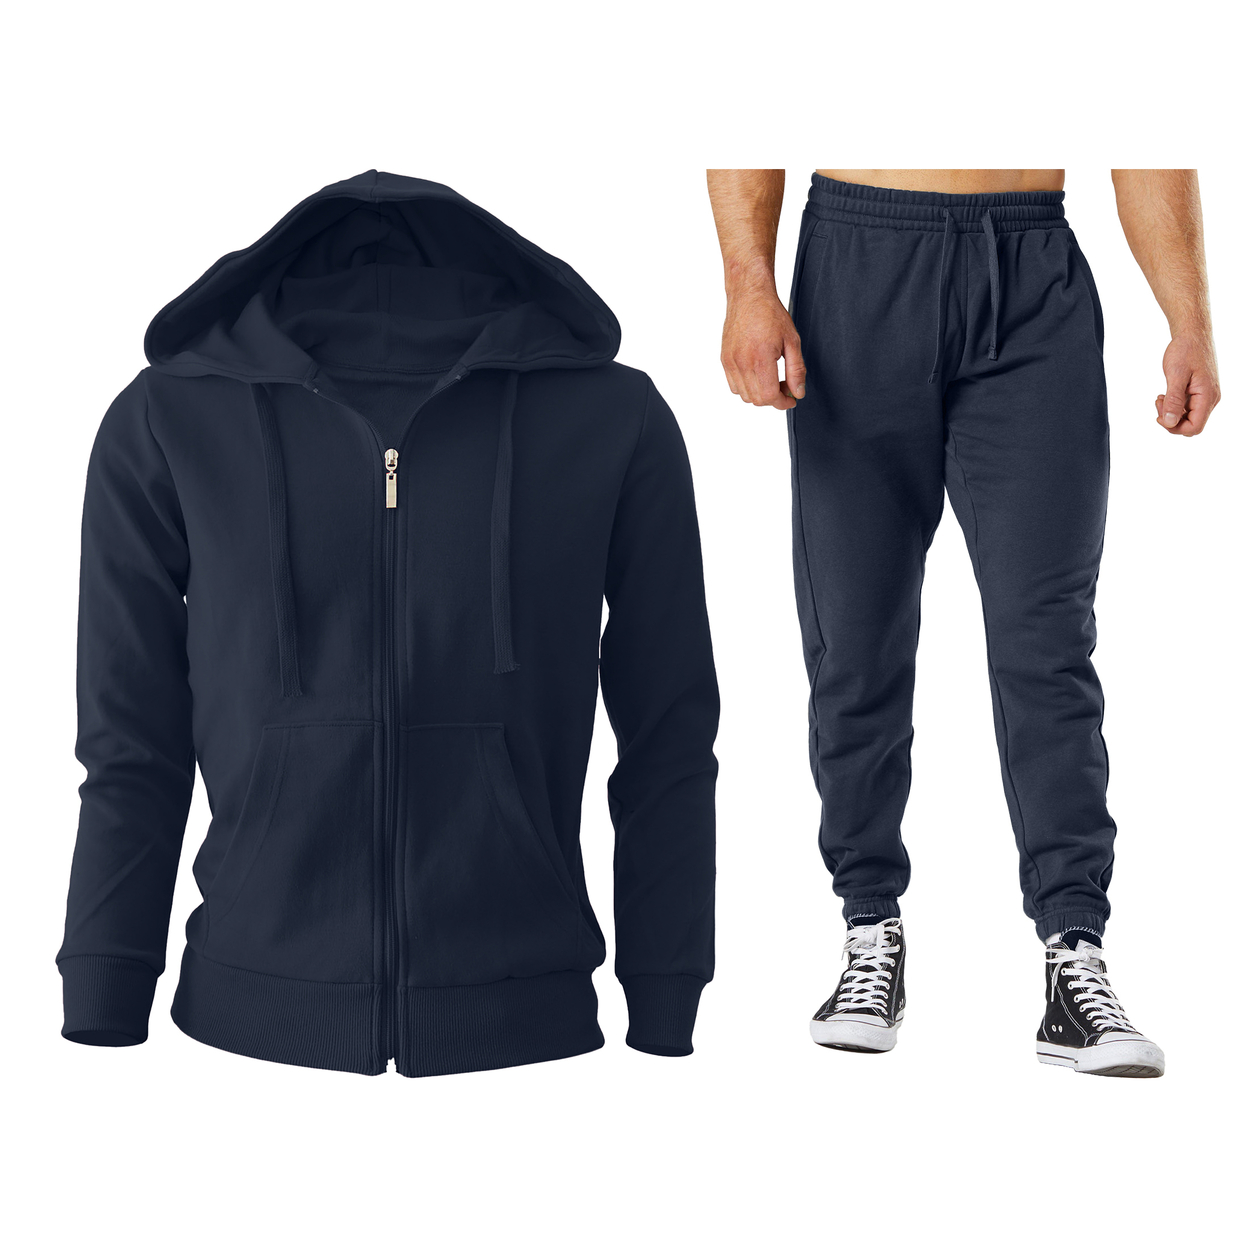 2/4-Piece: Men's Winter Warm Cozy Athletic Multi-Pockets BIG & TALL Sweatsuit Set - Charcoal, 1, Xx-large